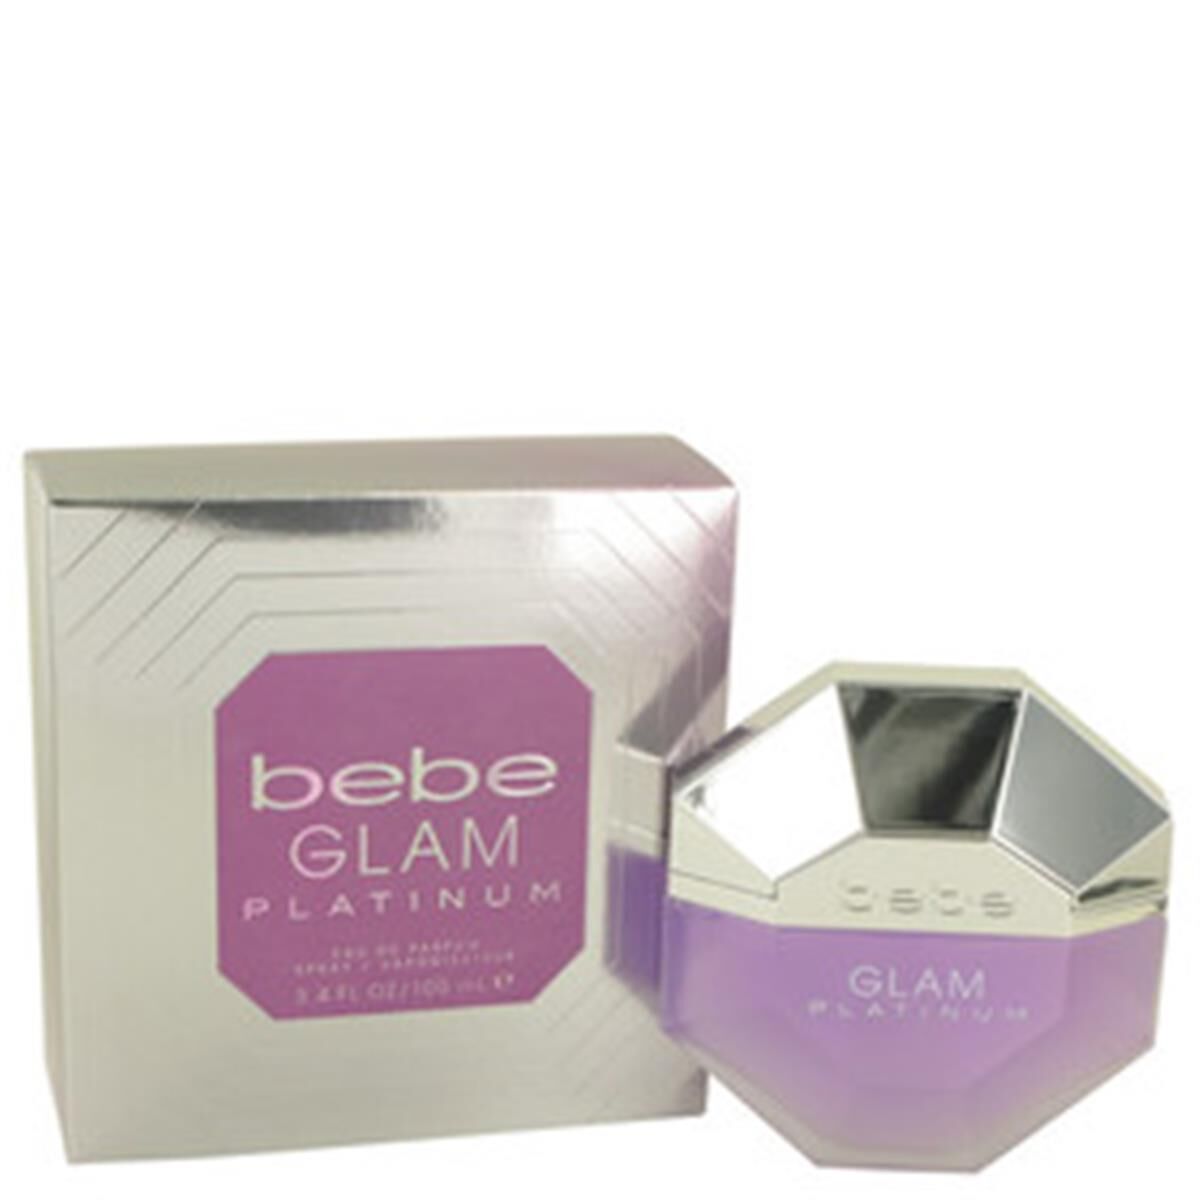 Bebe 533662 3.4 oz Eau De Parfum Spray for Women One Size female